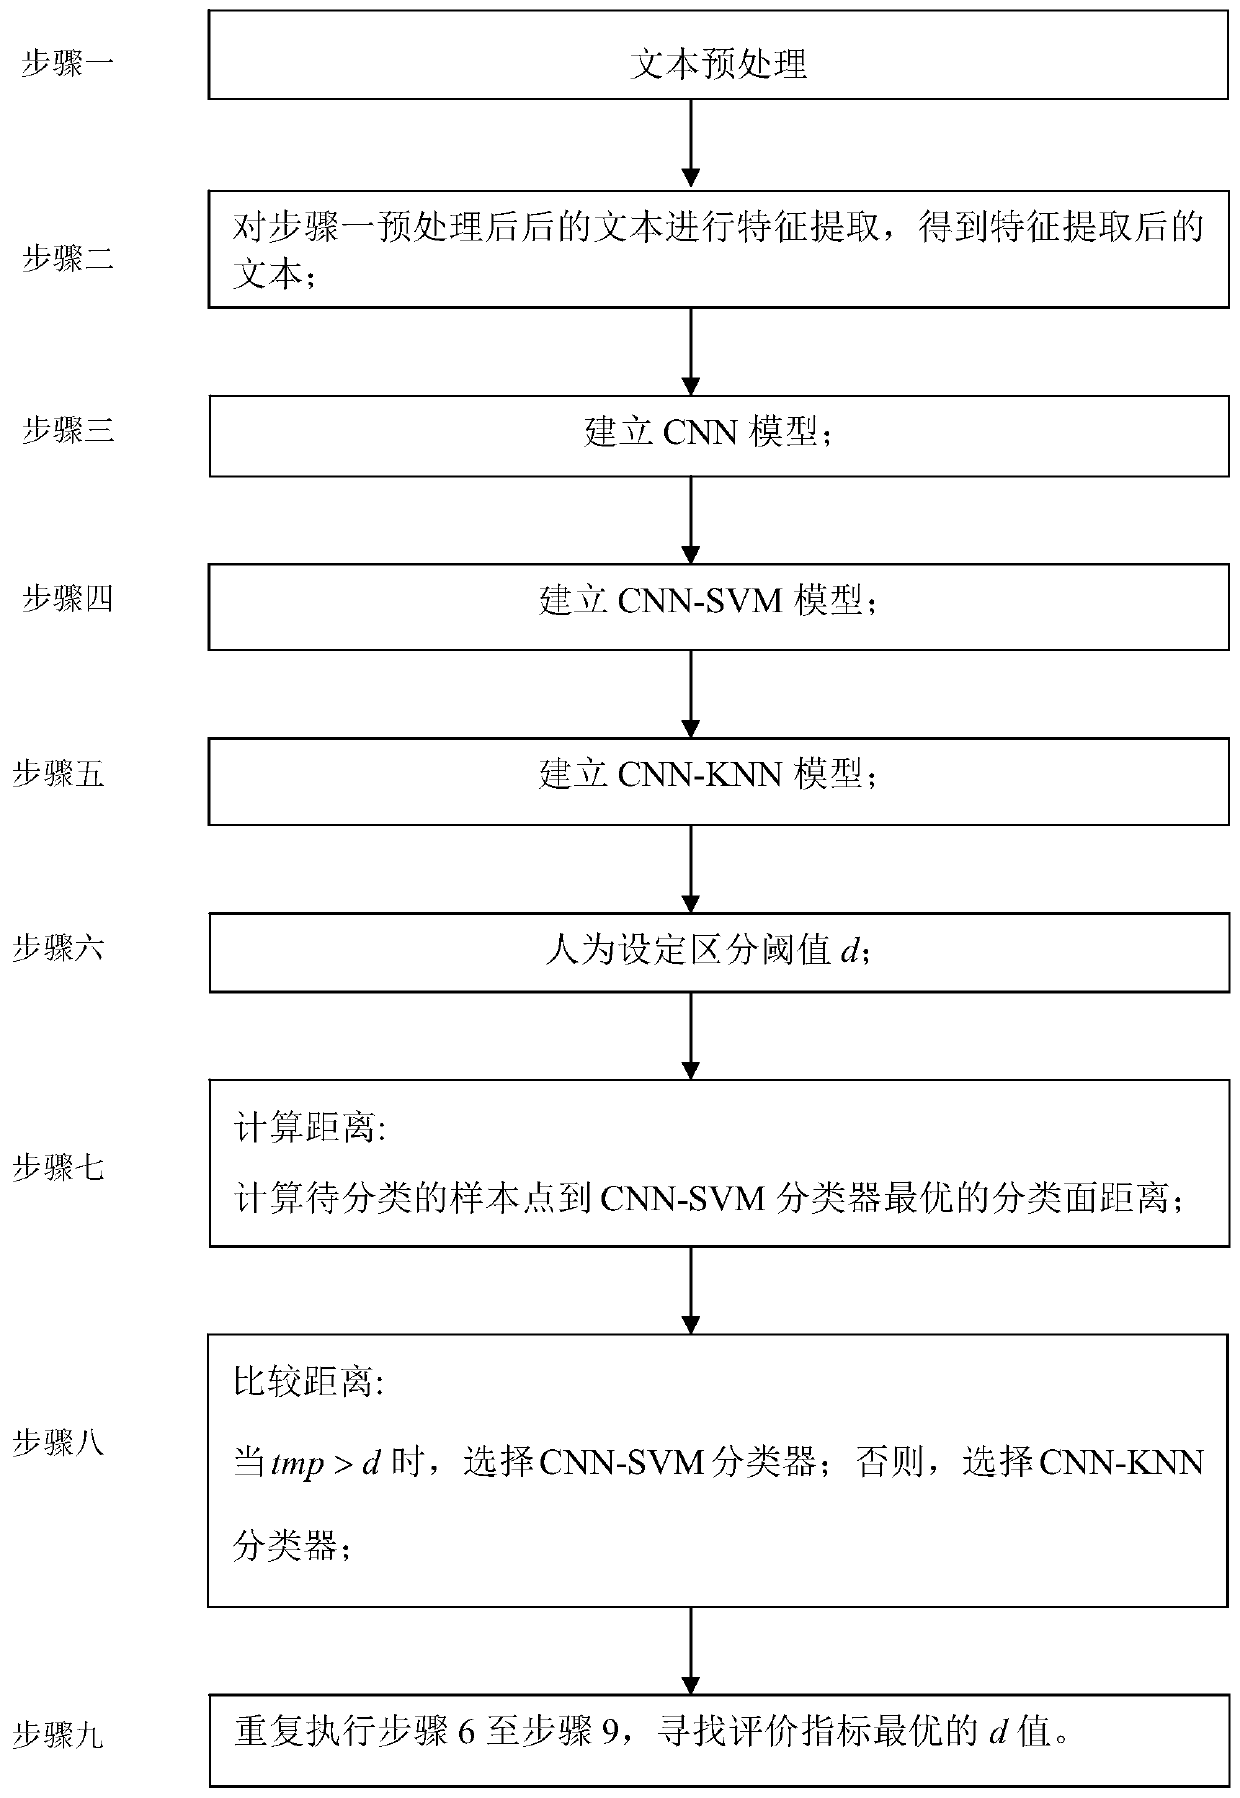 Text classification method based on CNN-SVM-KNN combined model